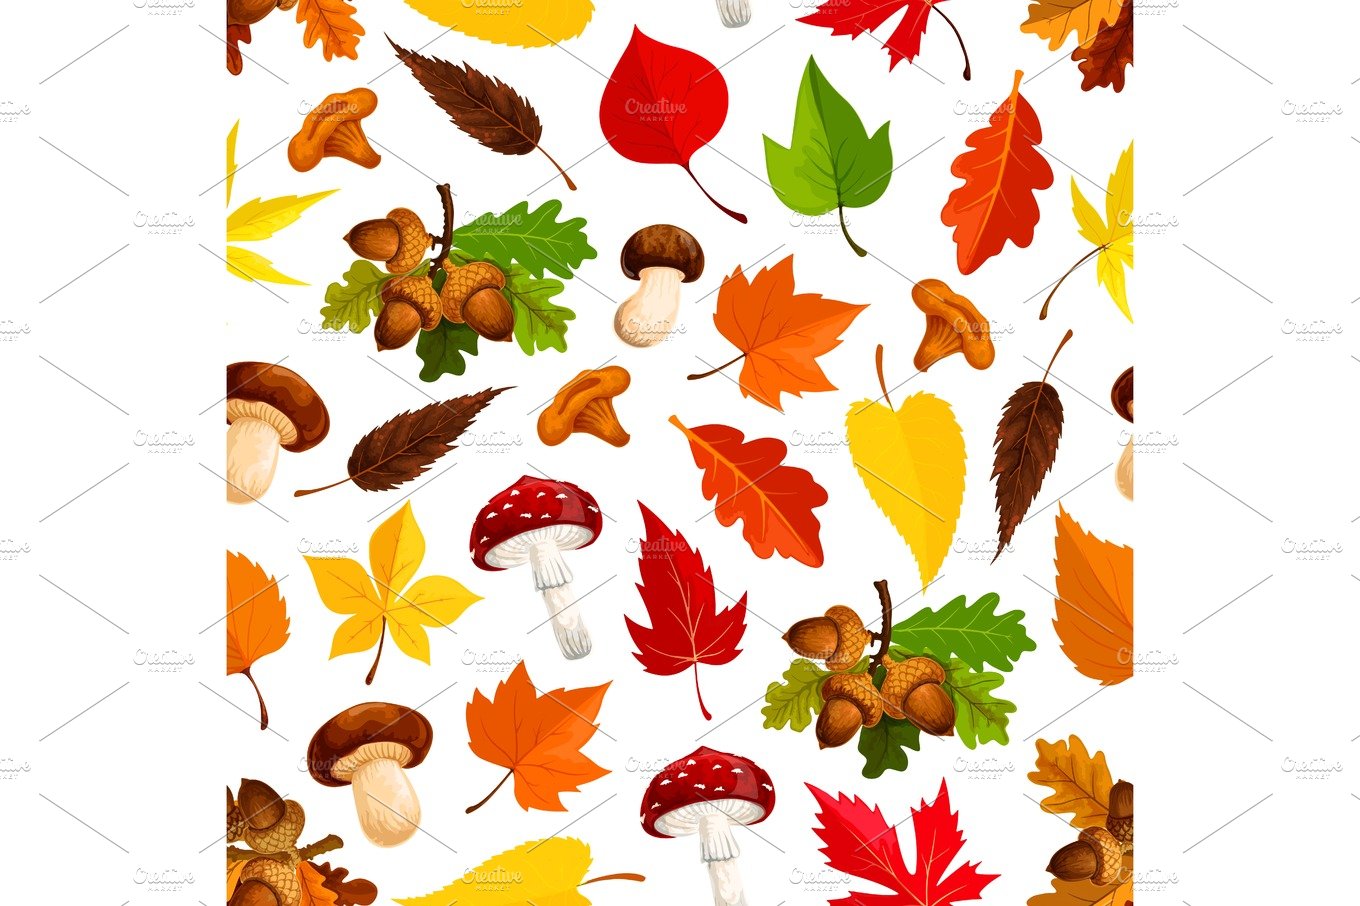 Autumn leaf, mushroom seamless pattern background cover image.